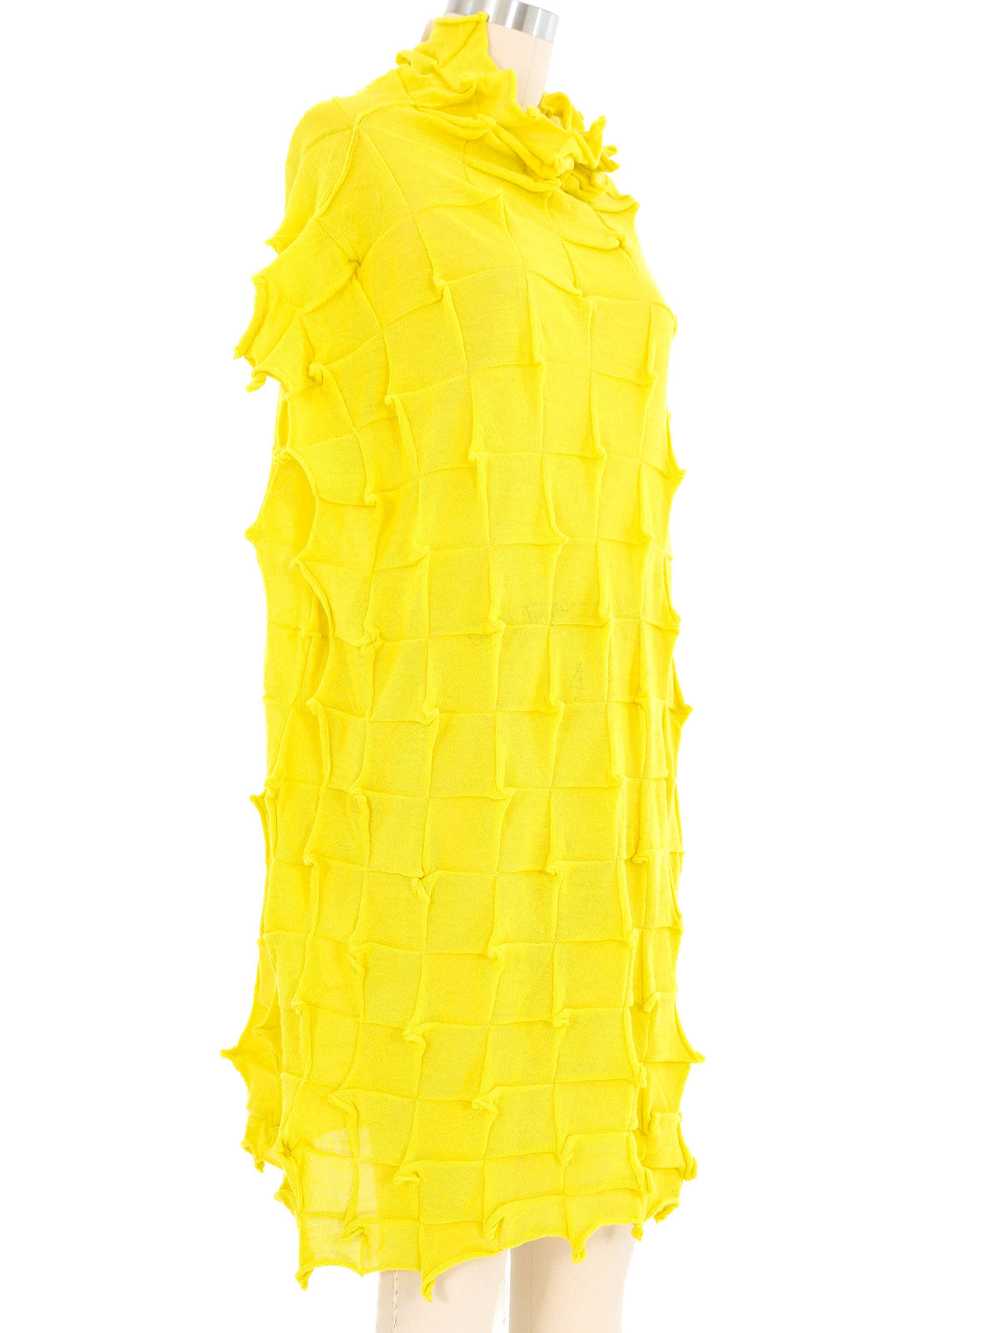 Issey Miyake Neon Textured Knit Dress - image 3